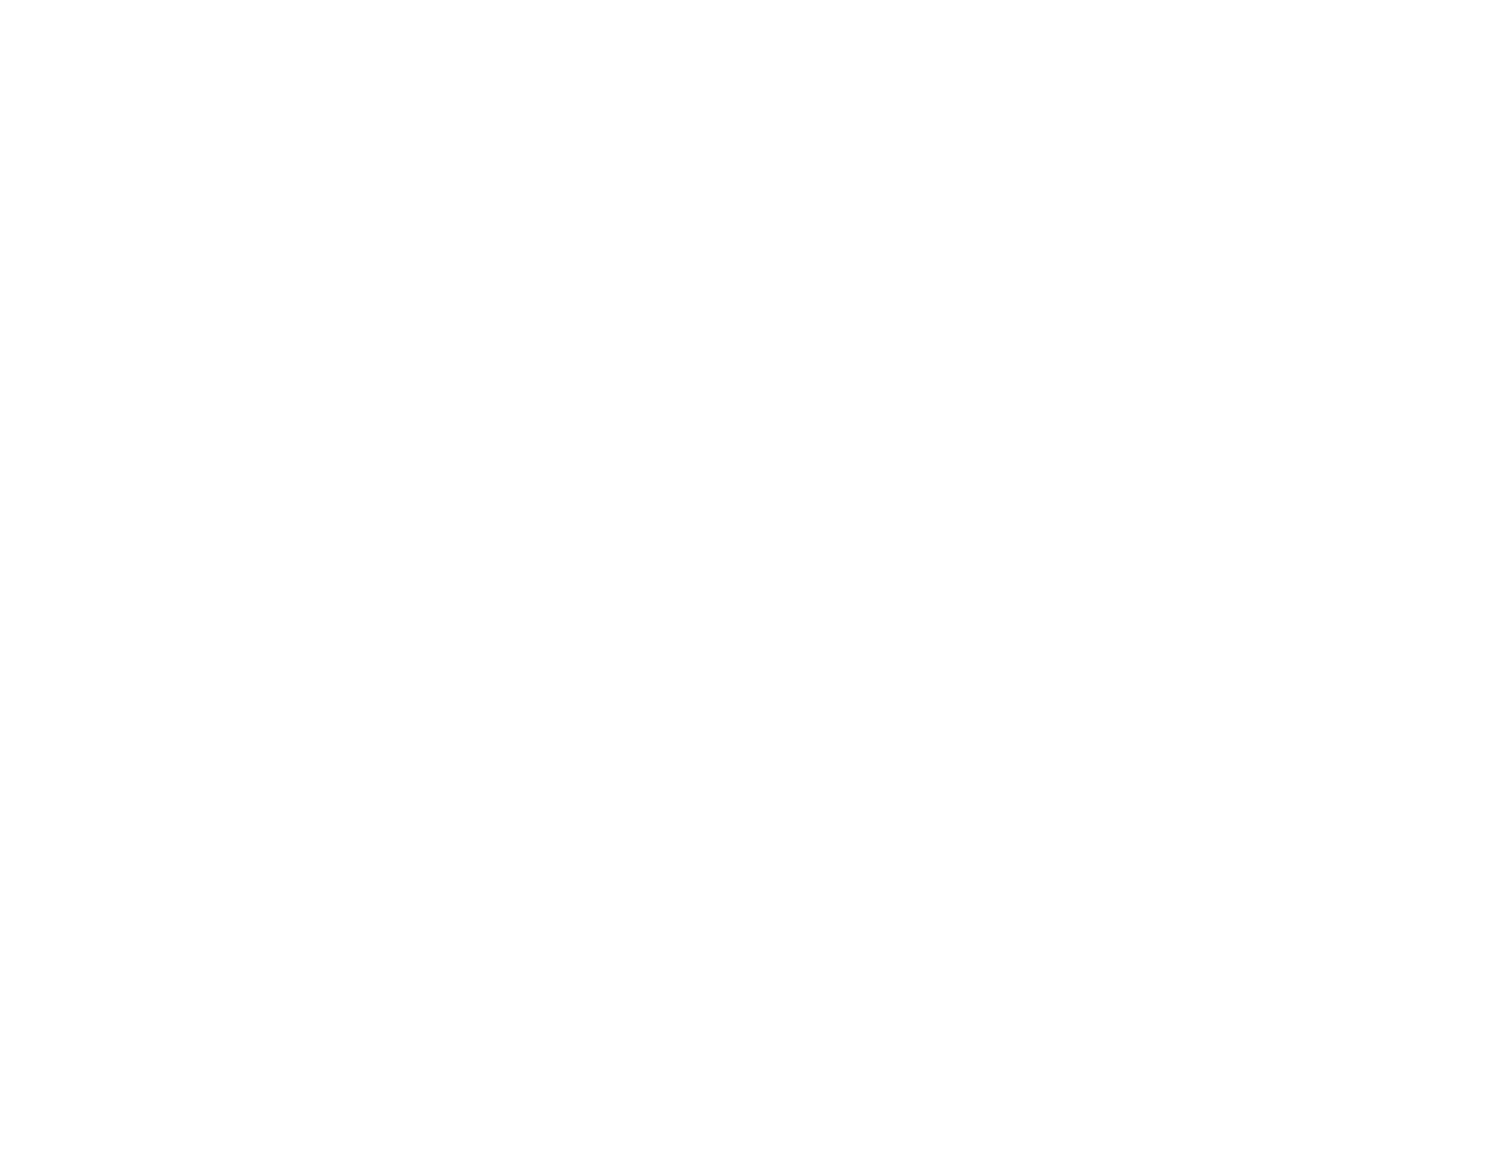 Whitelaw Weddings